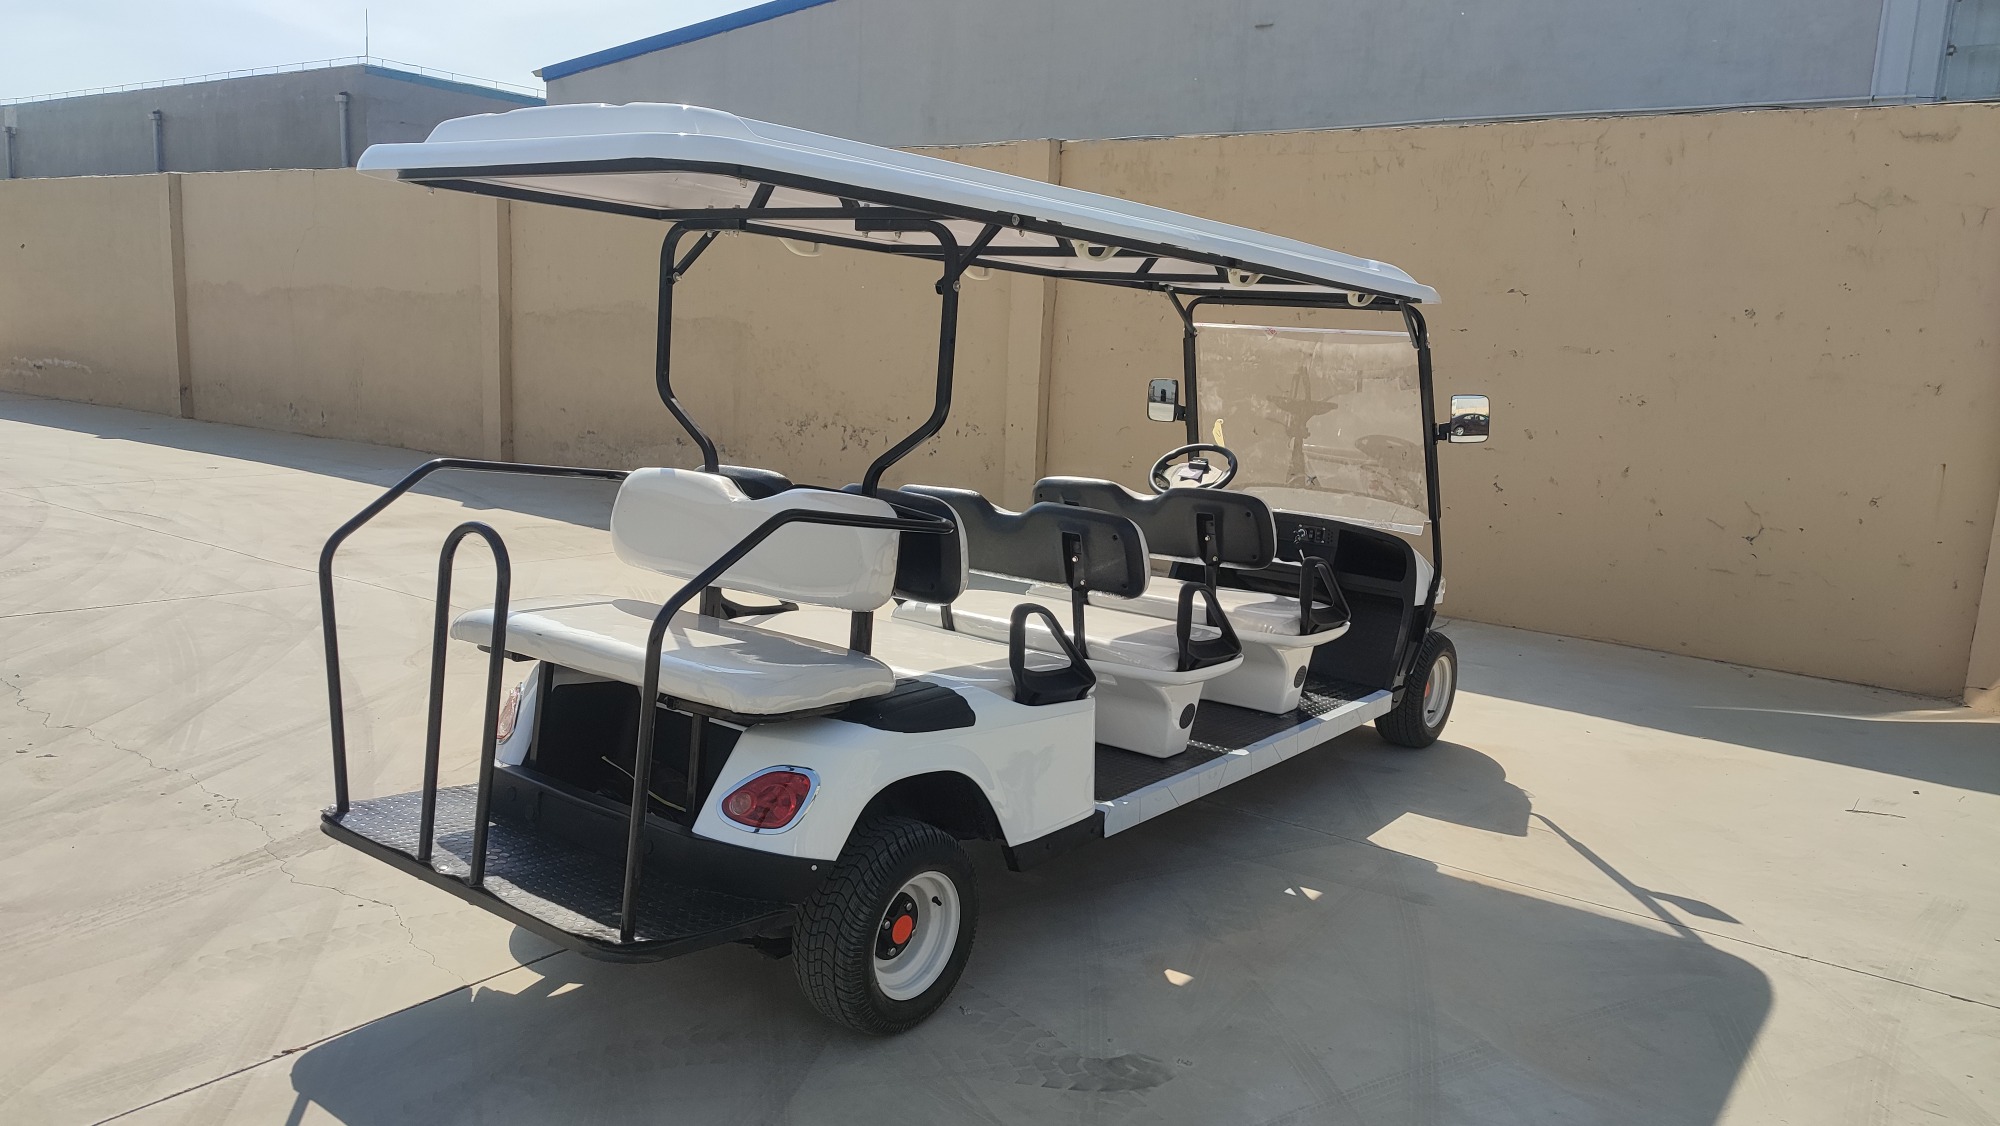 8 Seats Electric Golf Club Cart-white